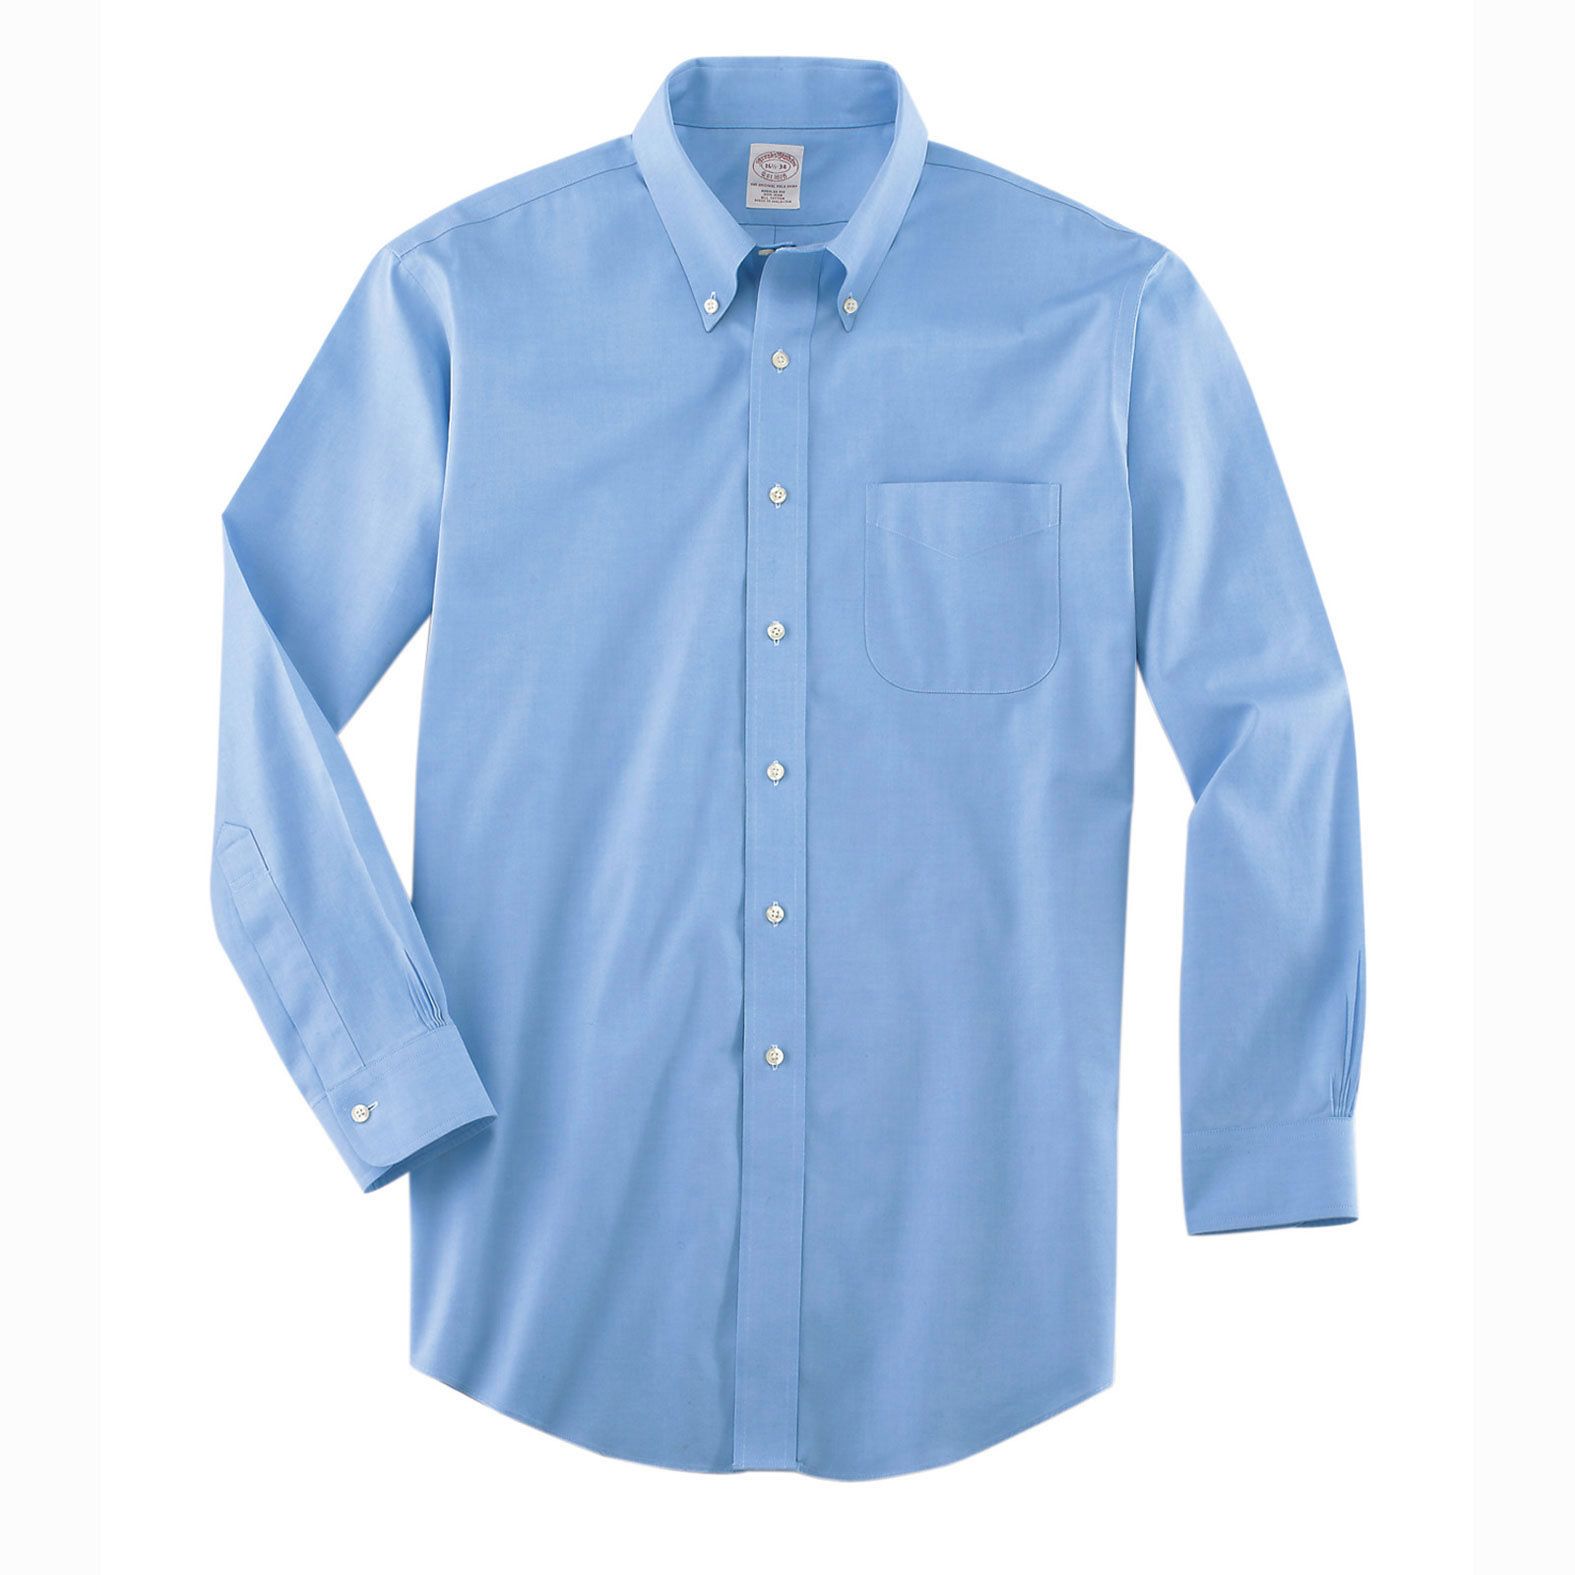 Blue Dress Shirt Clip Art Festive inspirations for the new Sleekster  collection